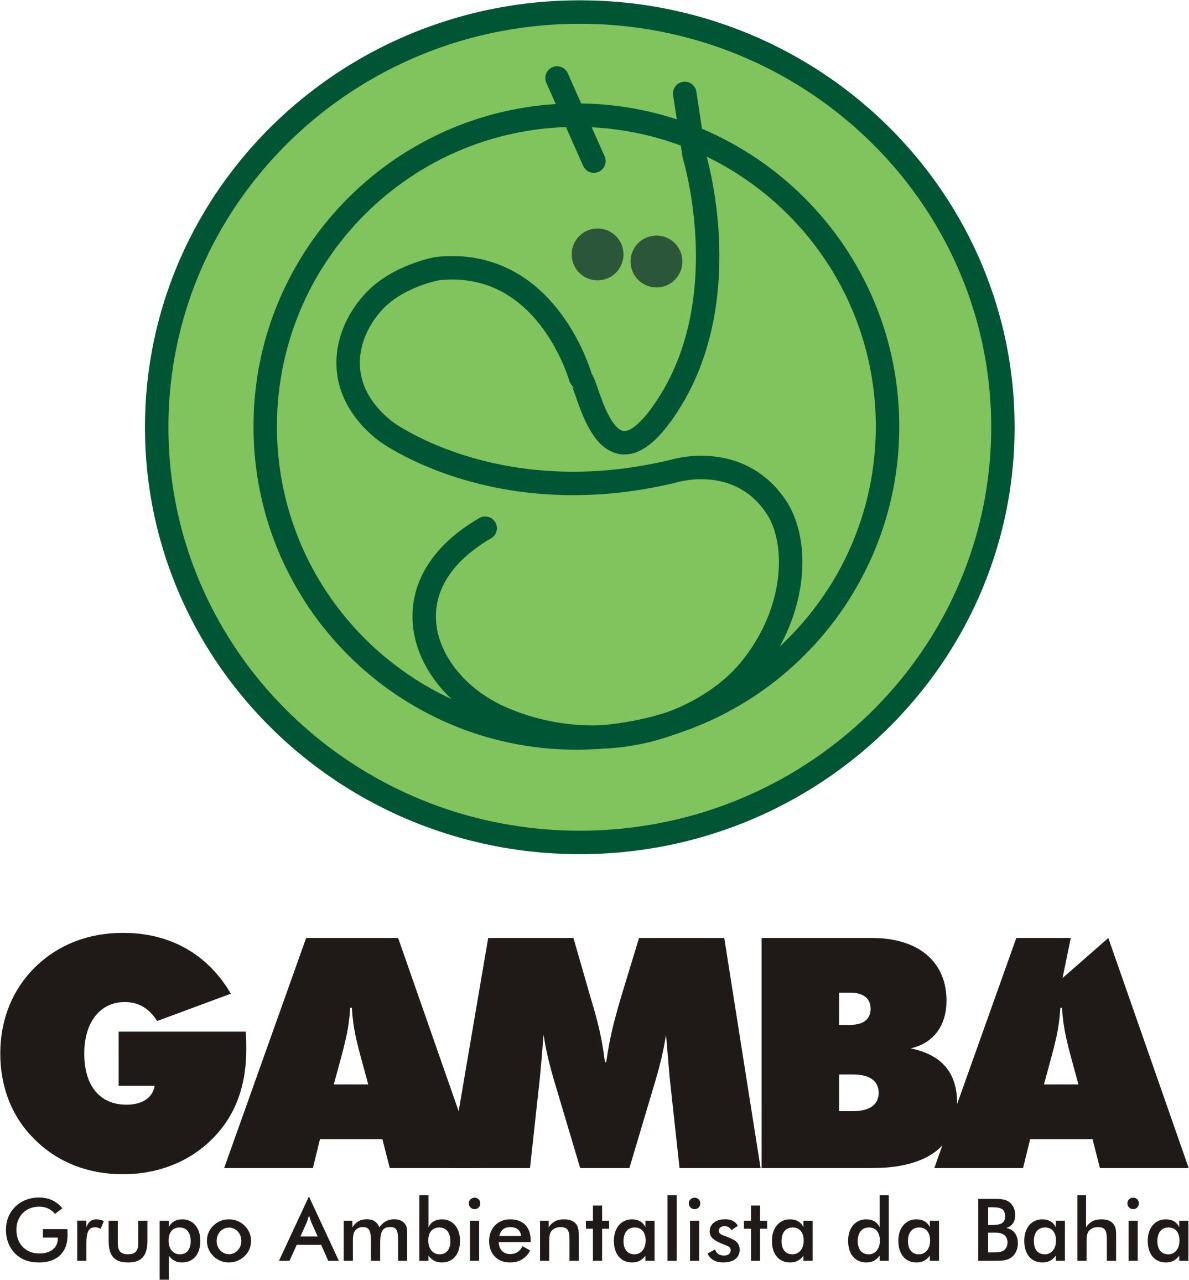 Grupo Ambientalista da Bahia